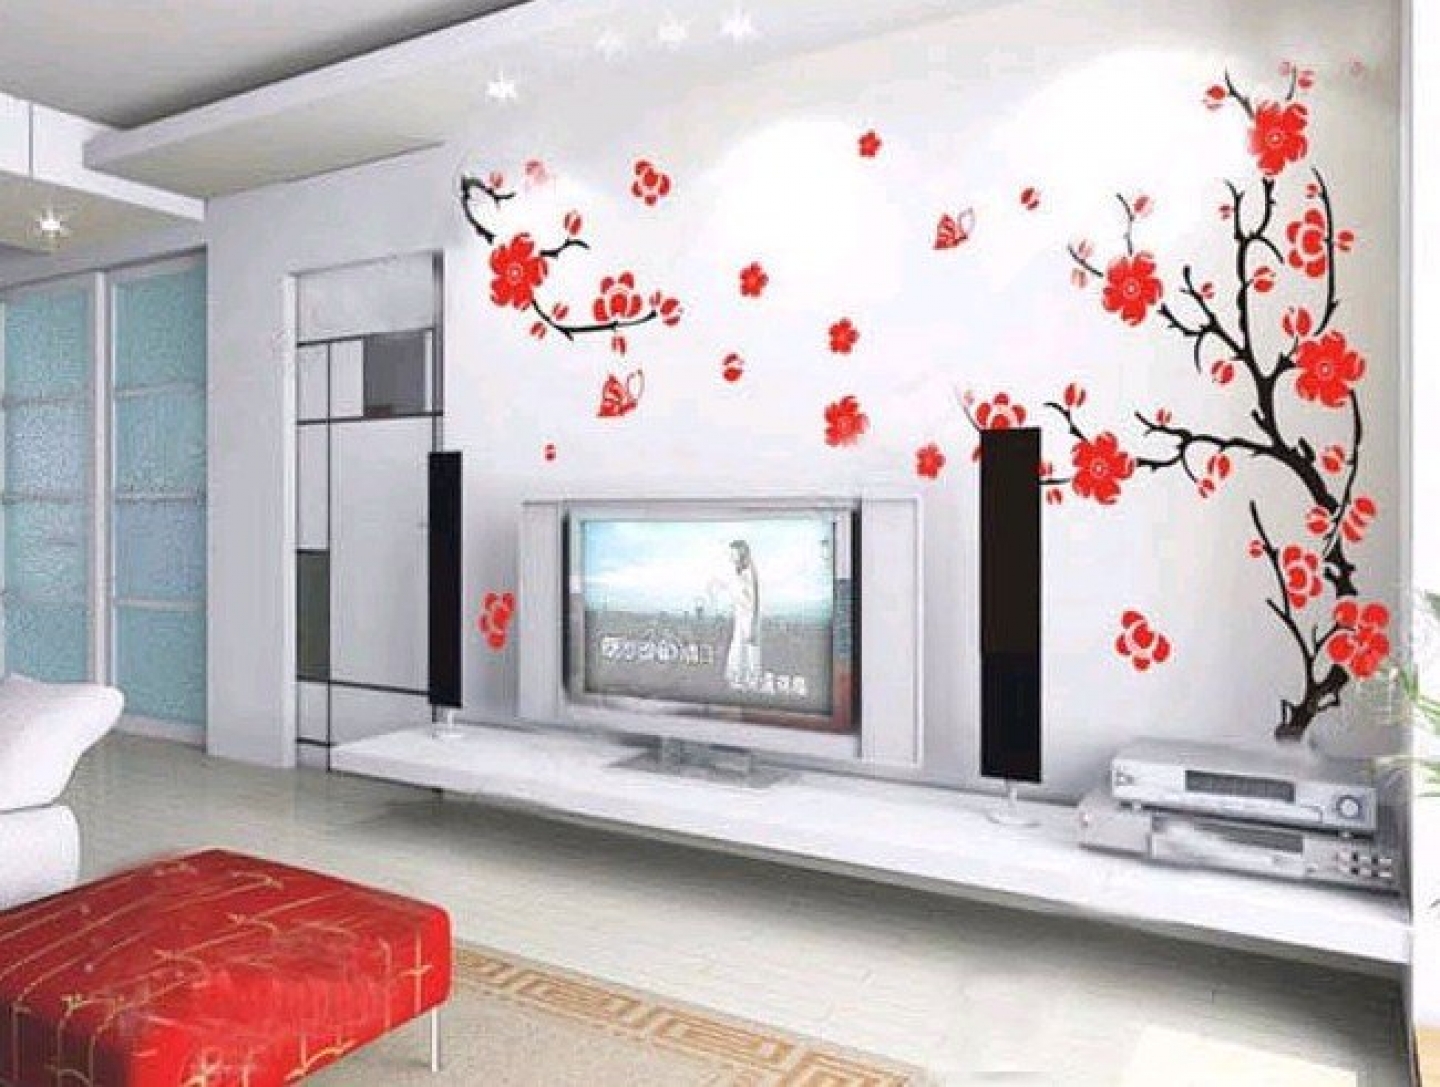  interiordesignforhouses com living room living room bed